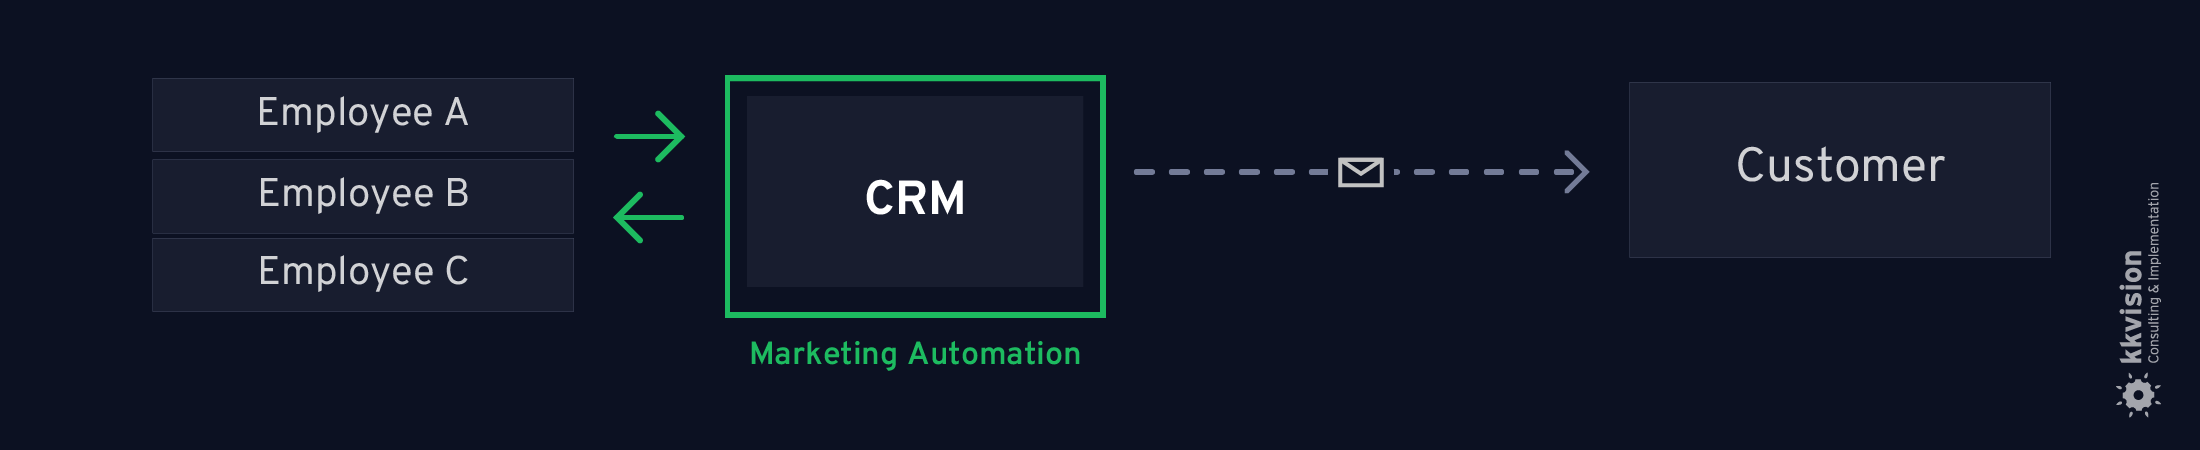 CRM & Marketing Automation_Improve Customer Relationship